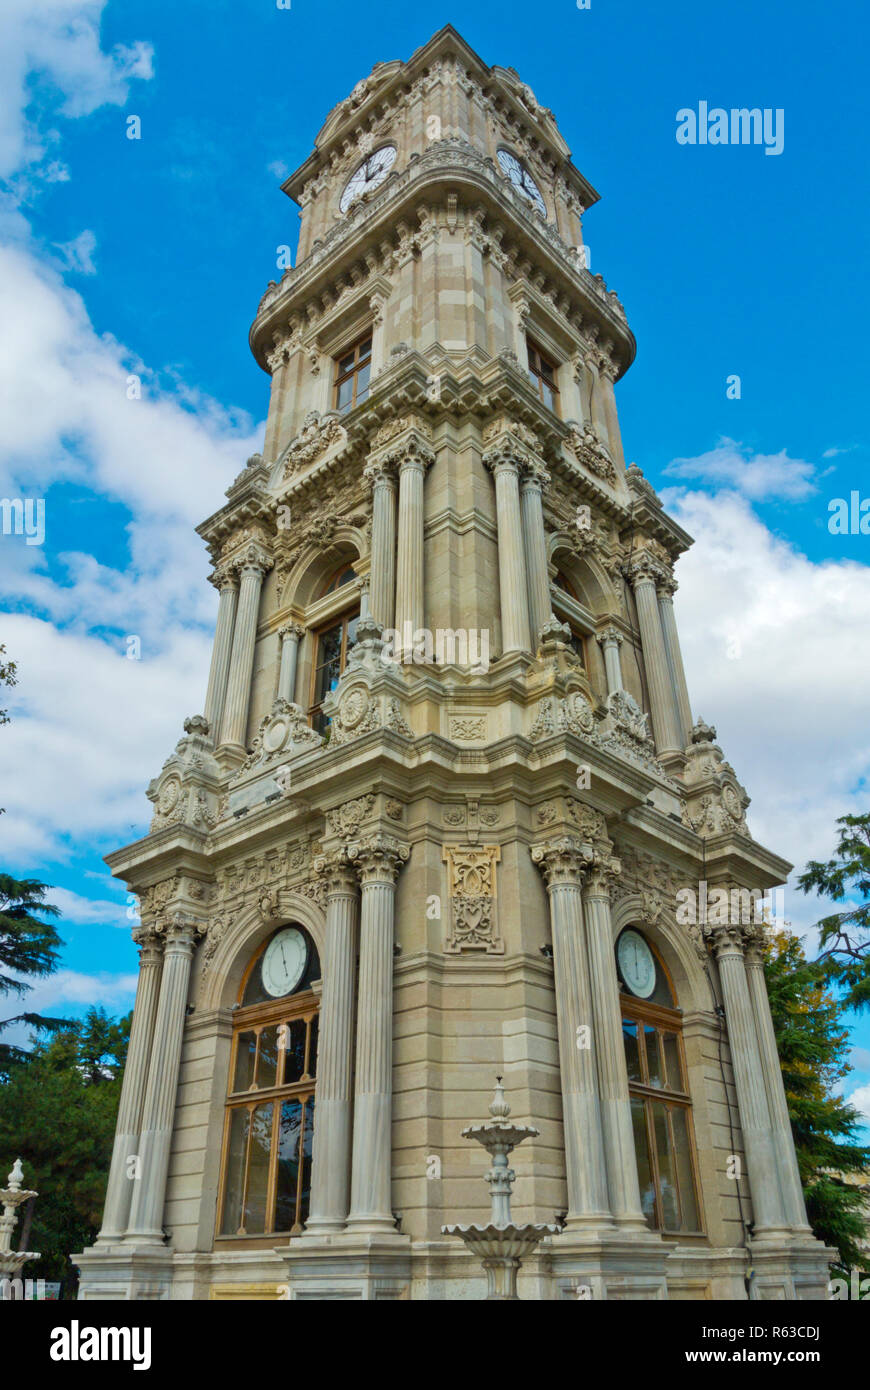 Dolmabahce Saat Kulesi, Dolmabahce Clock Tower, Dolmabahce Sarayi, Dolmabache palace grounds, Kabatas, Istanbul, Turkey, Eurasia Stock Photo